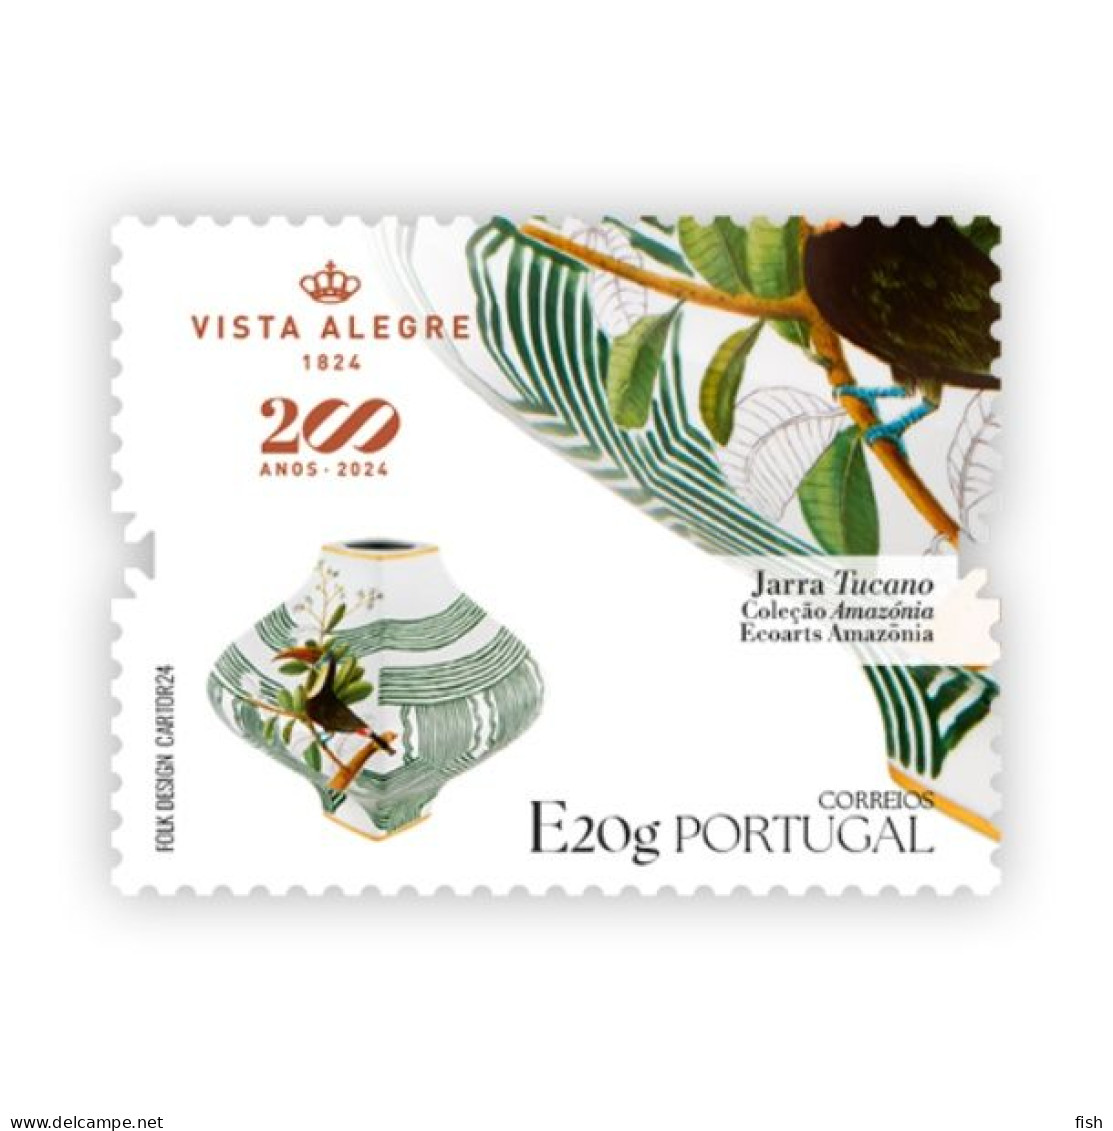 Portugal ** & 200 Years Of Vista Alegre, Tucano Jar, Amazonia Collection, Ecoarte Amazonia 1824-2024 (7199) - Umweltschutz Und Klima